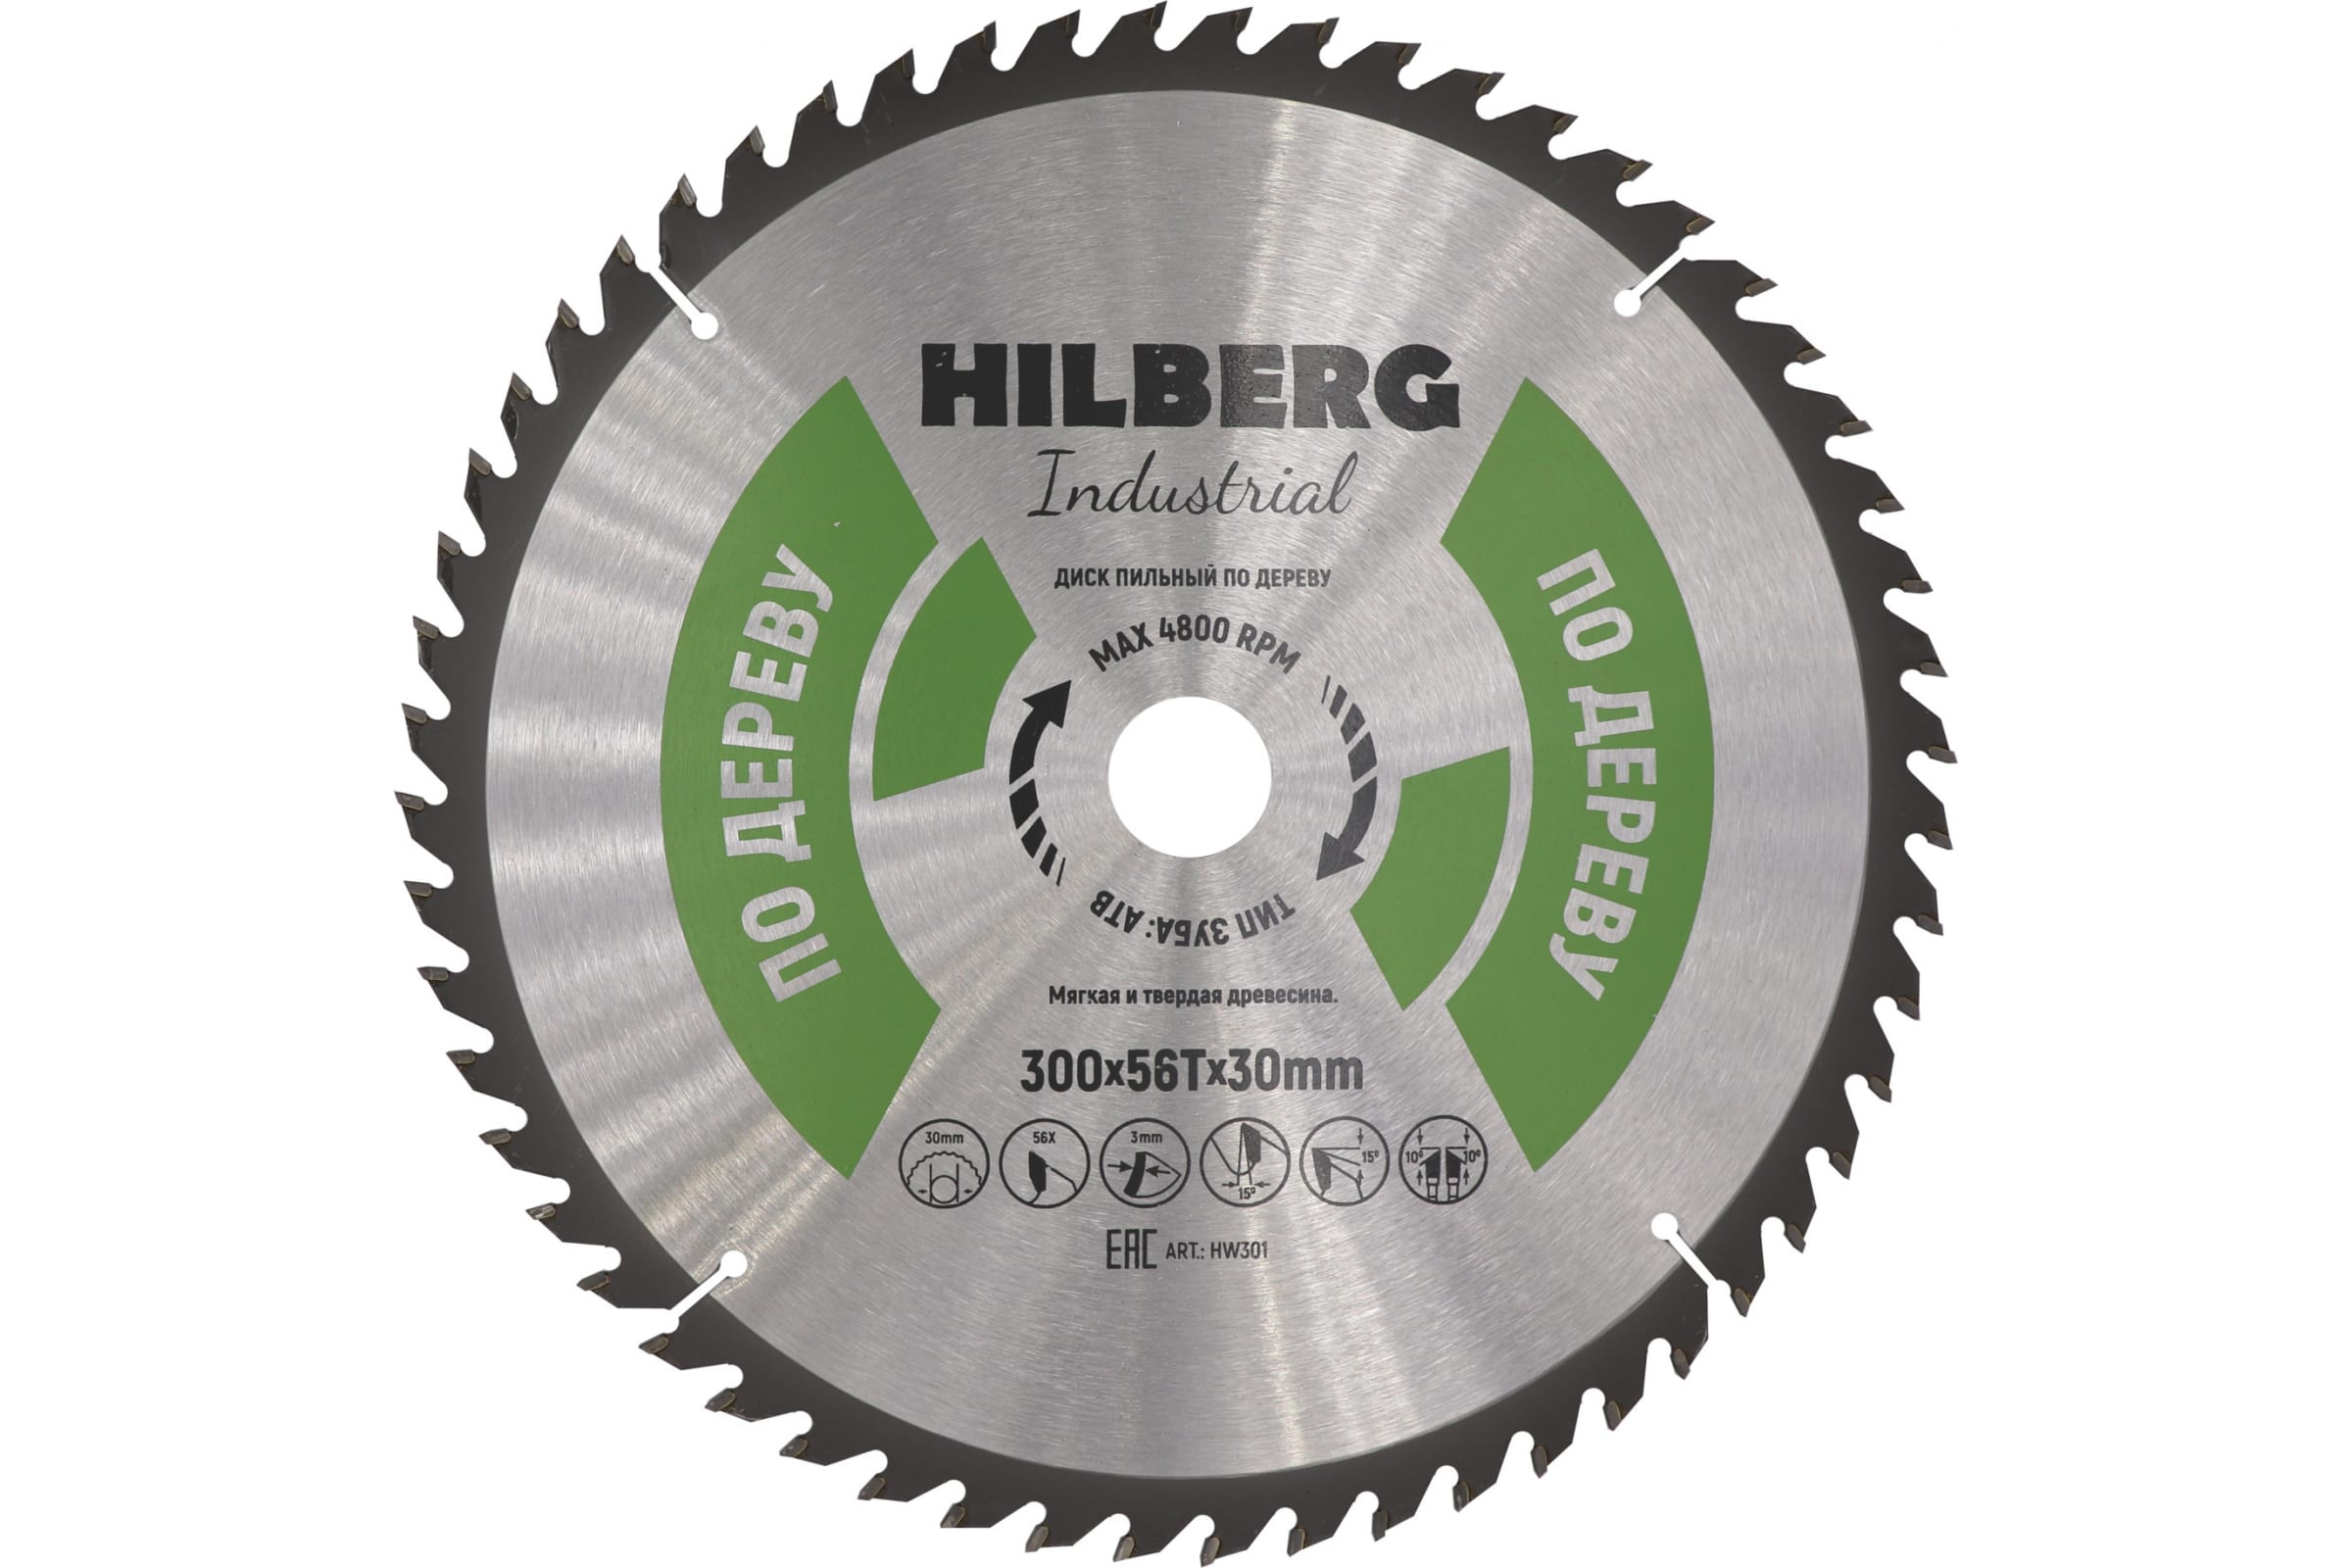 фото Hilberg диск пильный hilberg industrial дерево 300x30x56т hw301